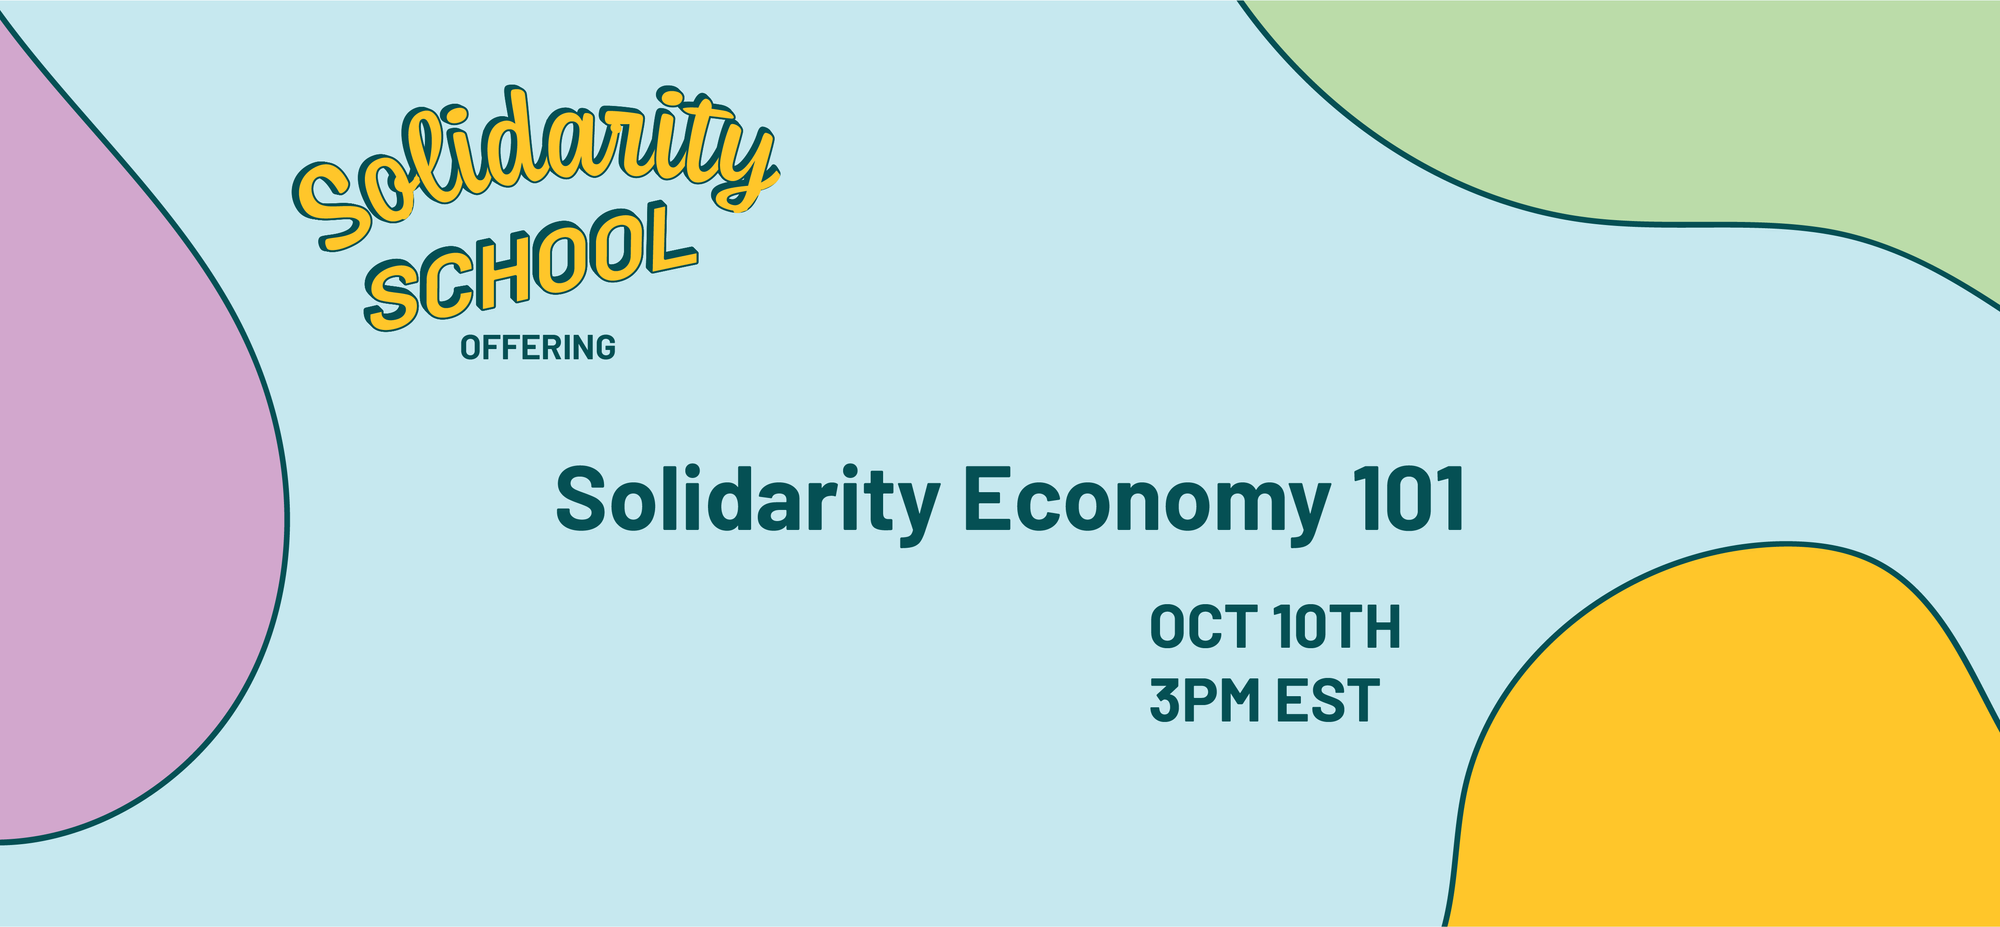 OC Foundation Presents: Solidarity School